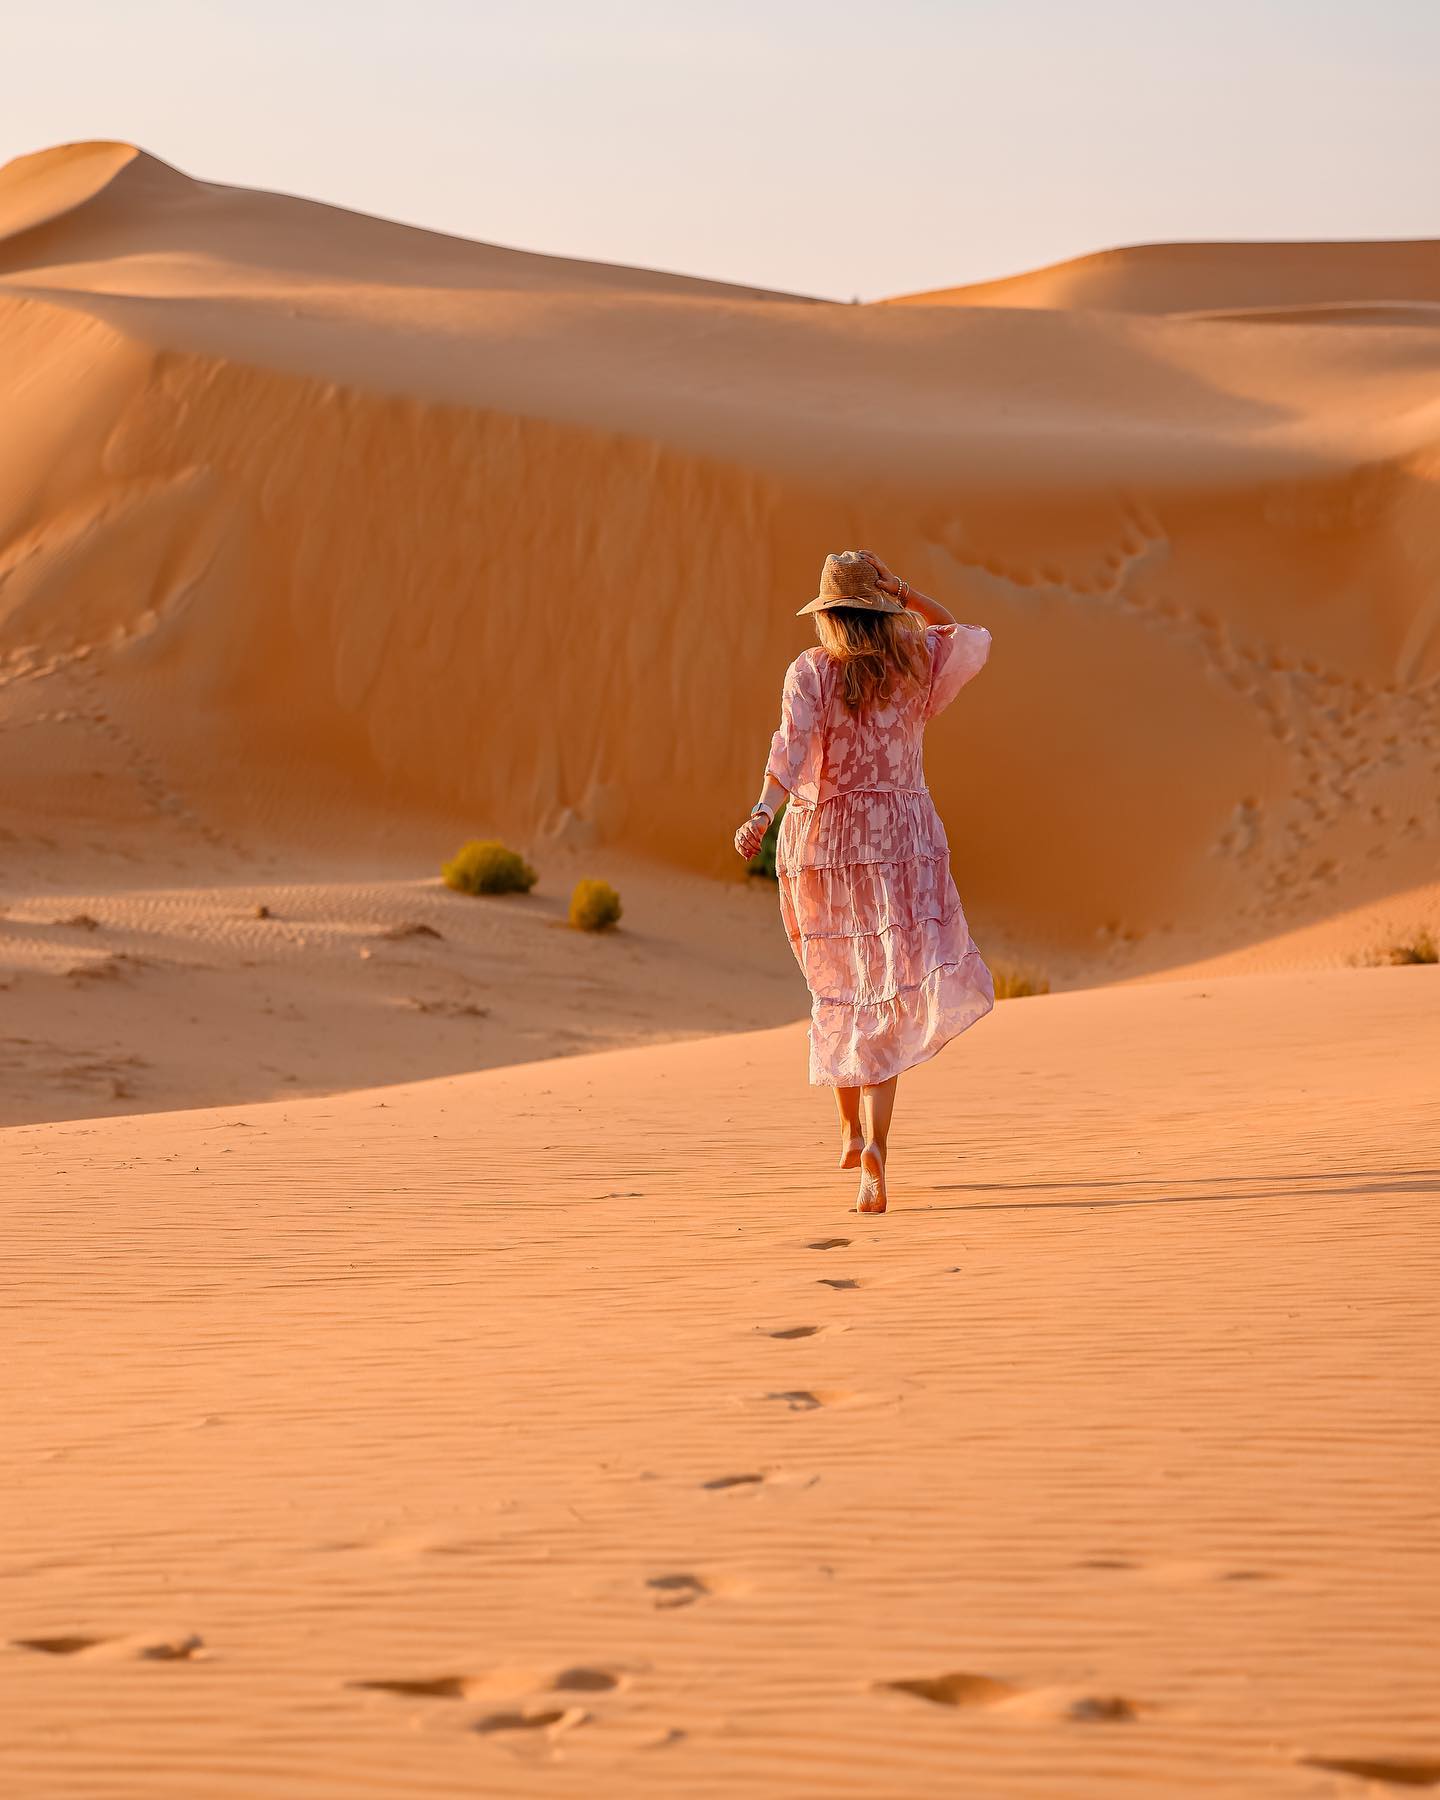 Did you know?? 😉

Climbing sand dunes is a task that isn’t easy. Almost every step requires attention and strength due to the instability of the sand. Running in the desert can also be challenging due to the softness of the terrain.

.
.

#anantaraqasralsarab #anantarajourneys #anantarahotels #inabudhabi #abudhabilife #desertlife #desertdunes #emptyquarter  #zjednoczoneemiratyarabskie #girllikeme #kobiecafotoszkoła #womanbelike #gogogirls #bloggerlifephotos #travelphotography #matkafotografka #getlostwithwizz #wearetravelgirls #polkinaobczyznie #matkablogerka #kingarashwanphotography